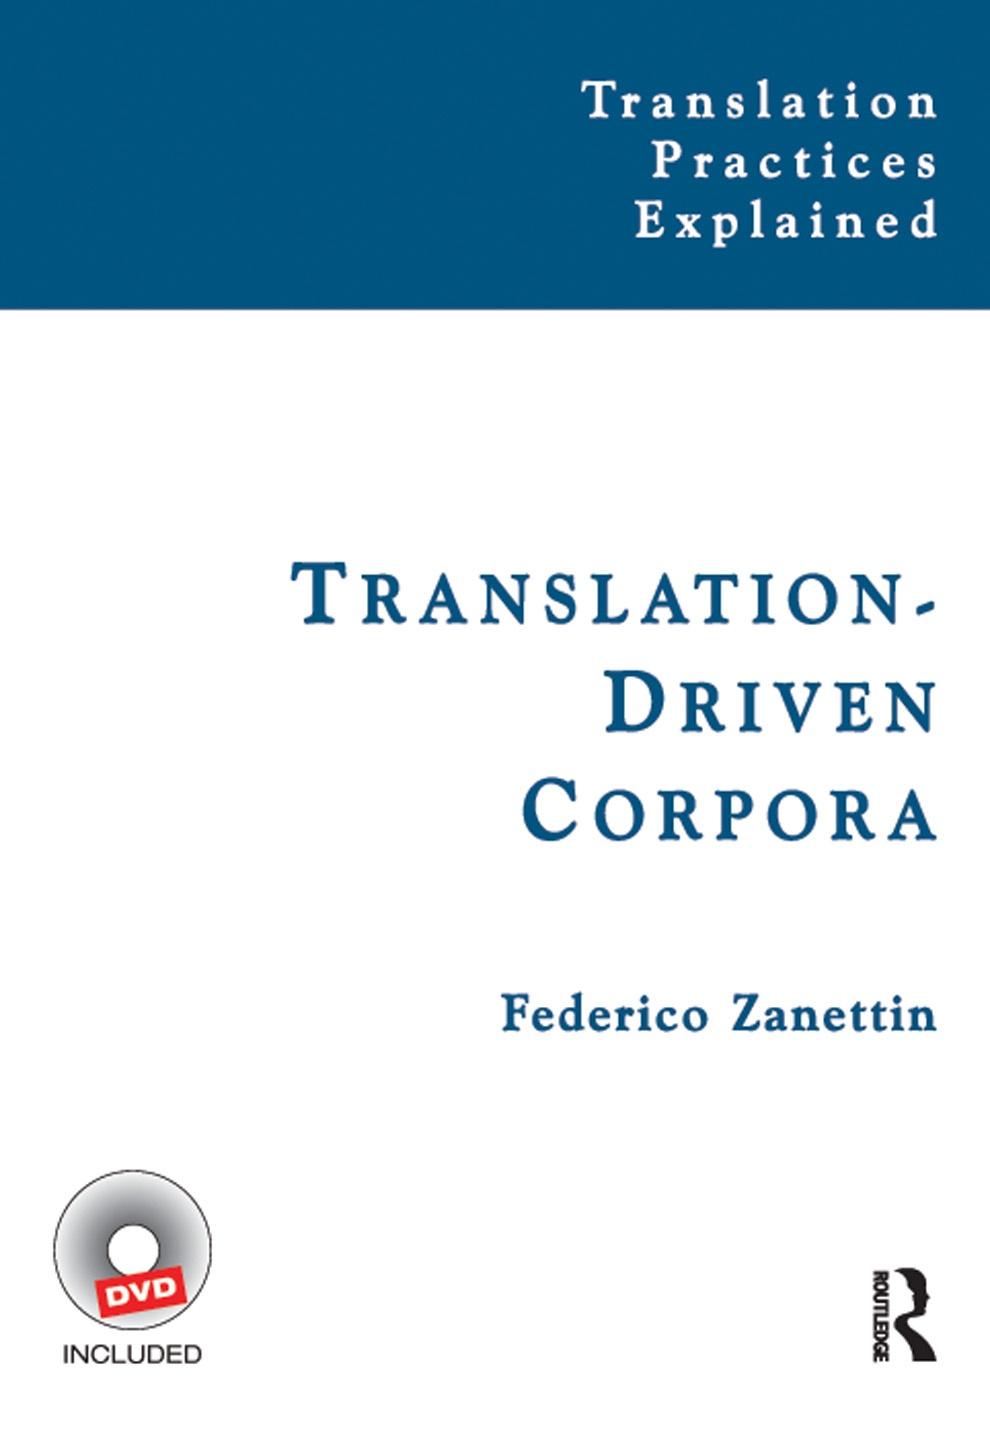 Translation-Driven Corpora: Corpus Resources for Descriptive and Applied Translation Studies